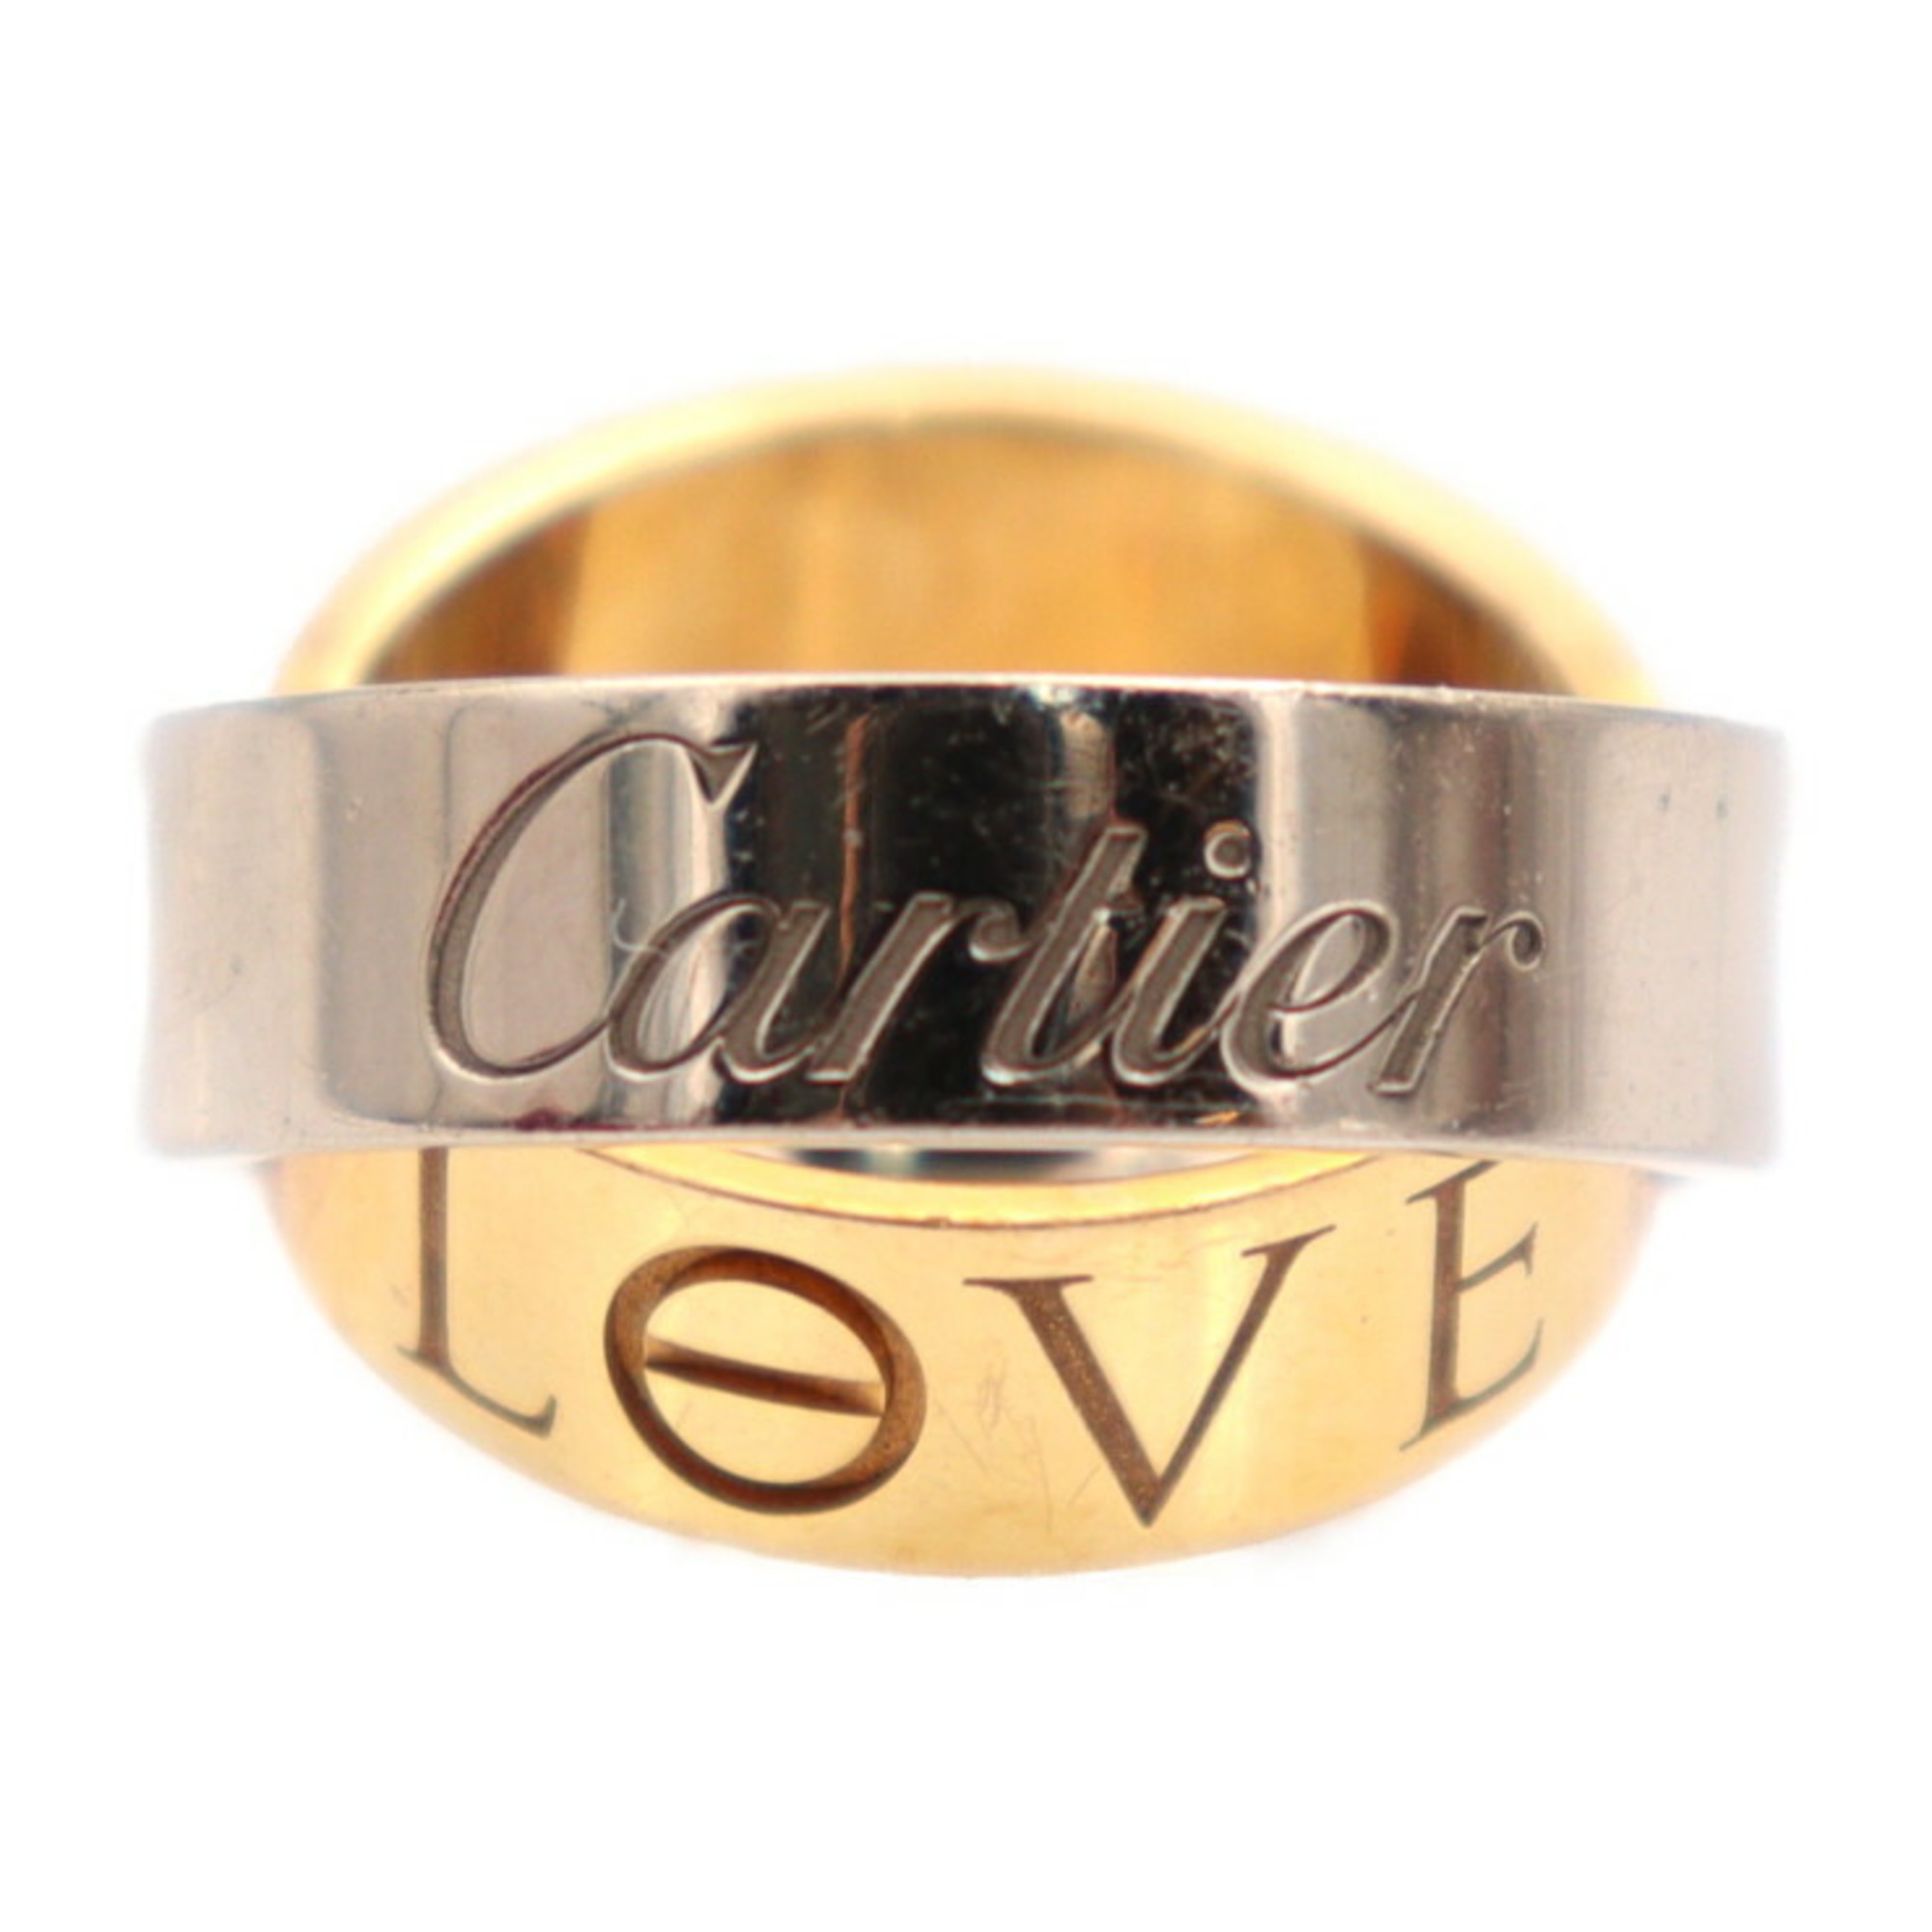 CARTIER Cartier Secret Love Ring LOVE B4065047 Notation Size 47 Au750 K18 WG White Gold PG Pink